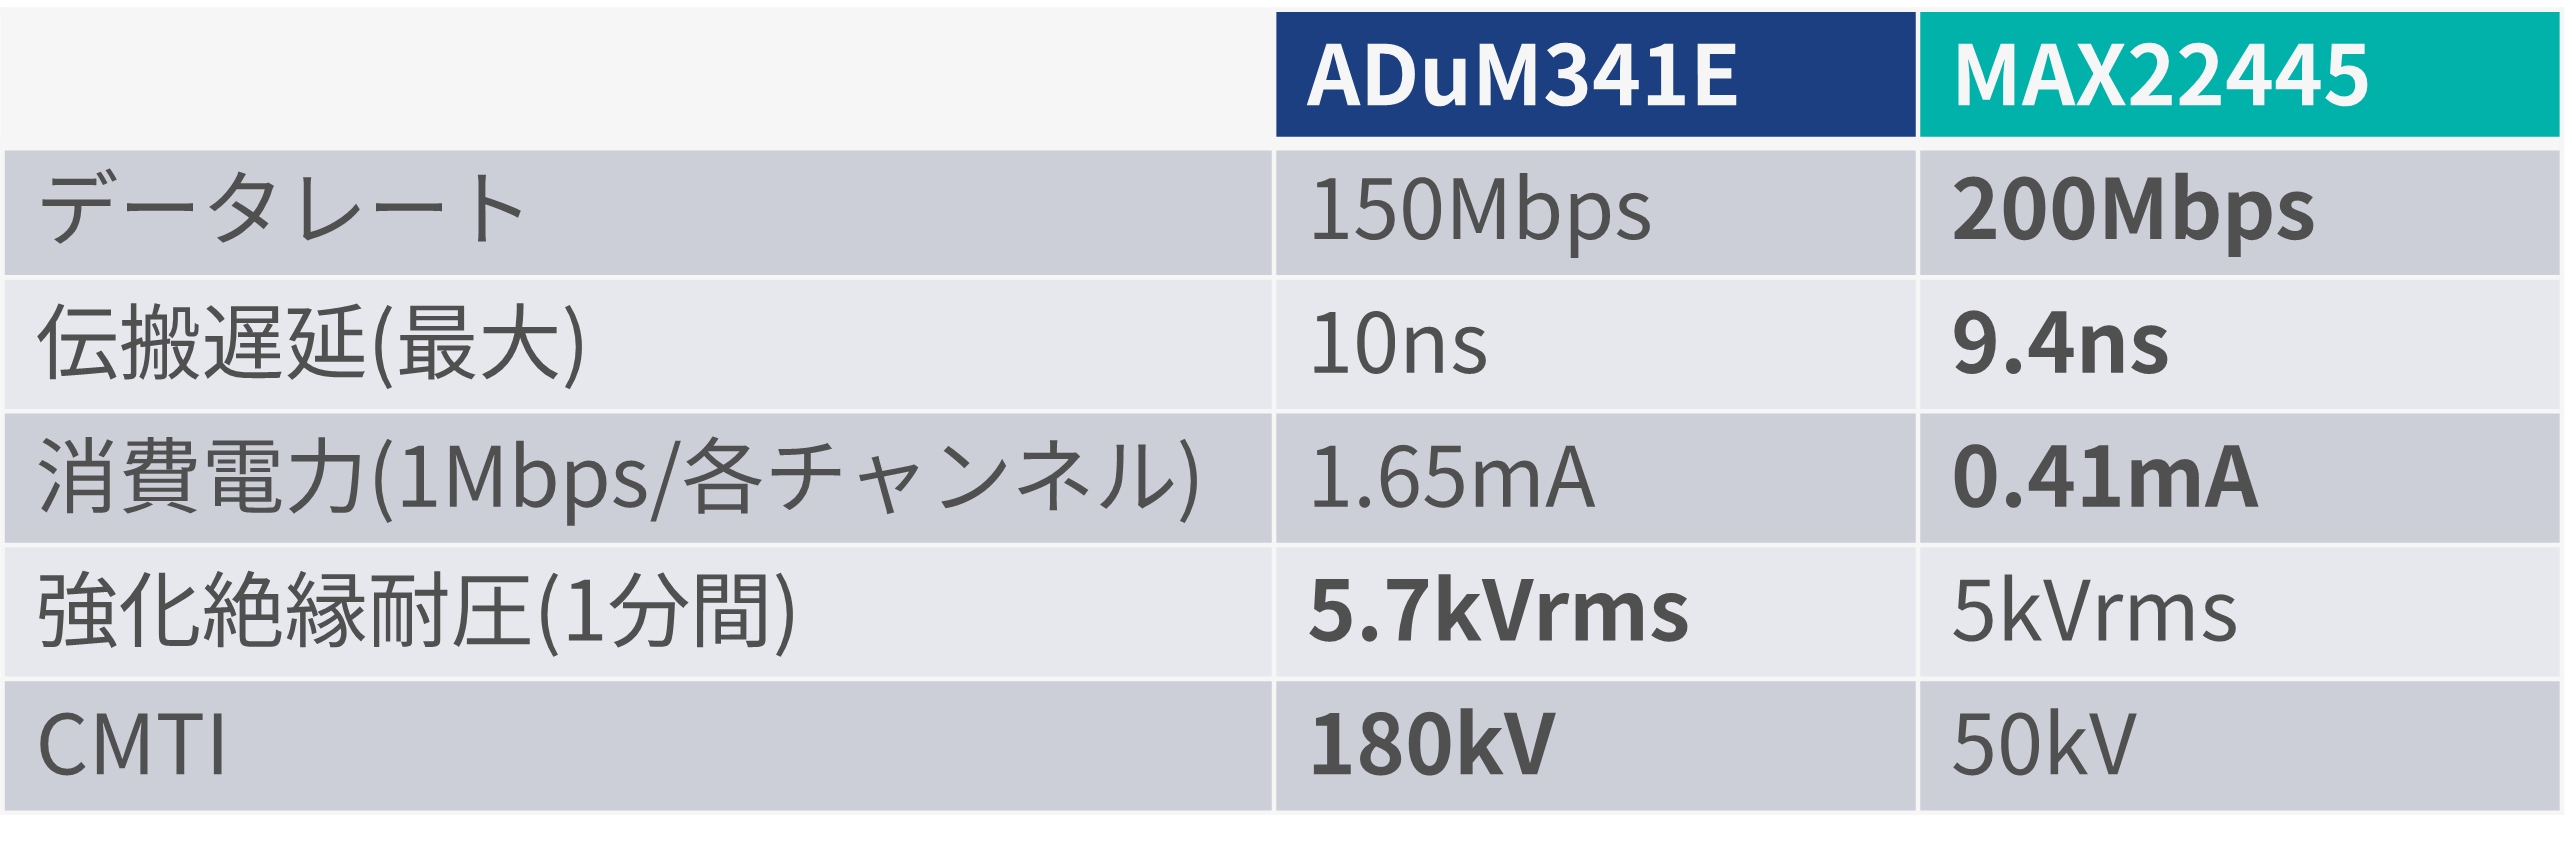 Spec comparison table of ADuM341E and MAX22445